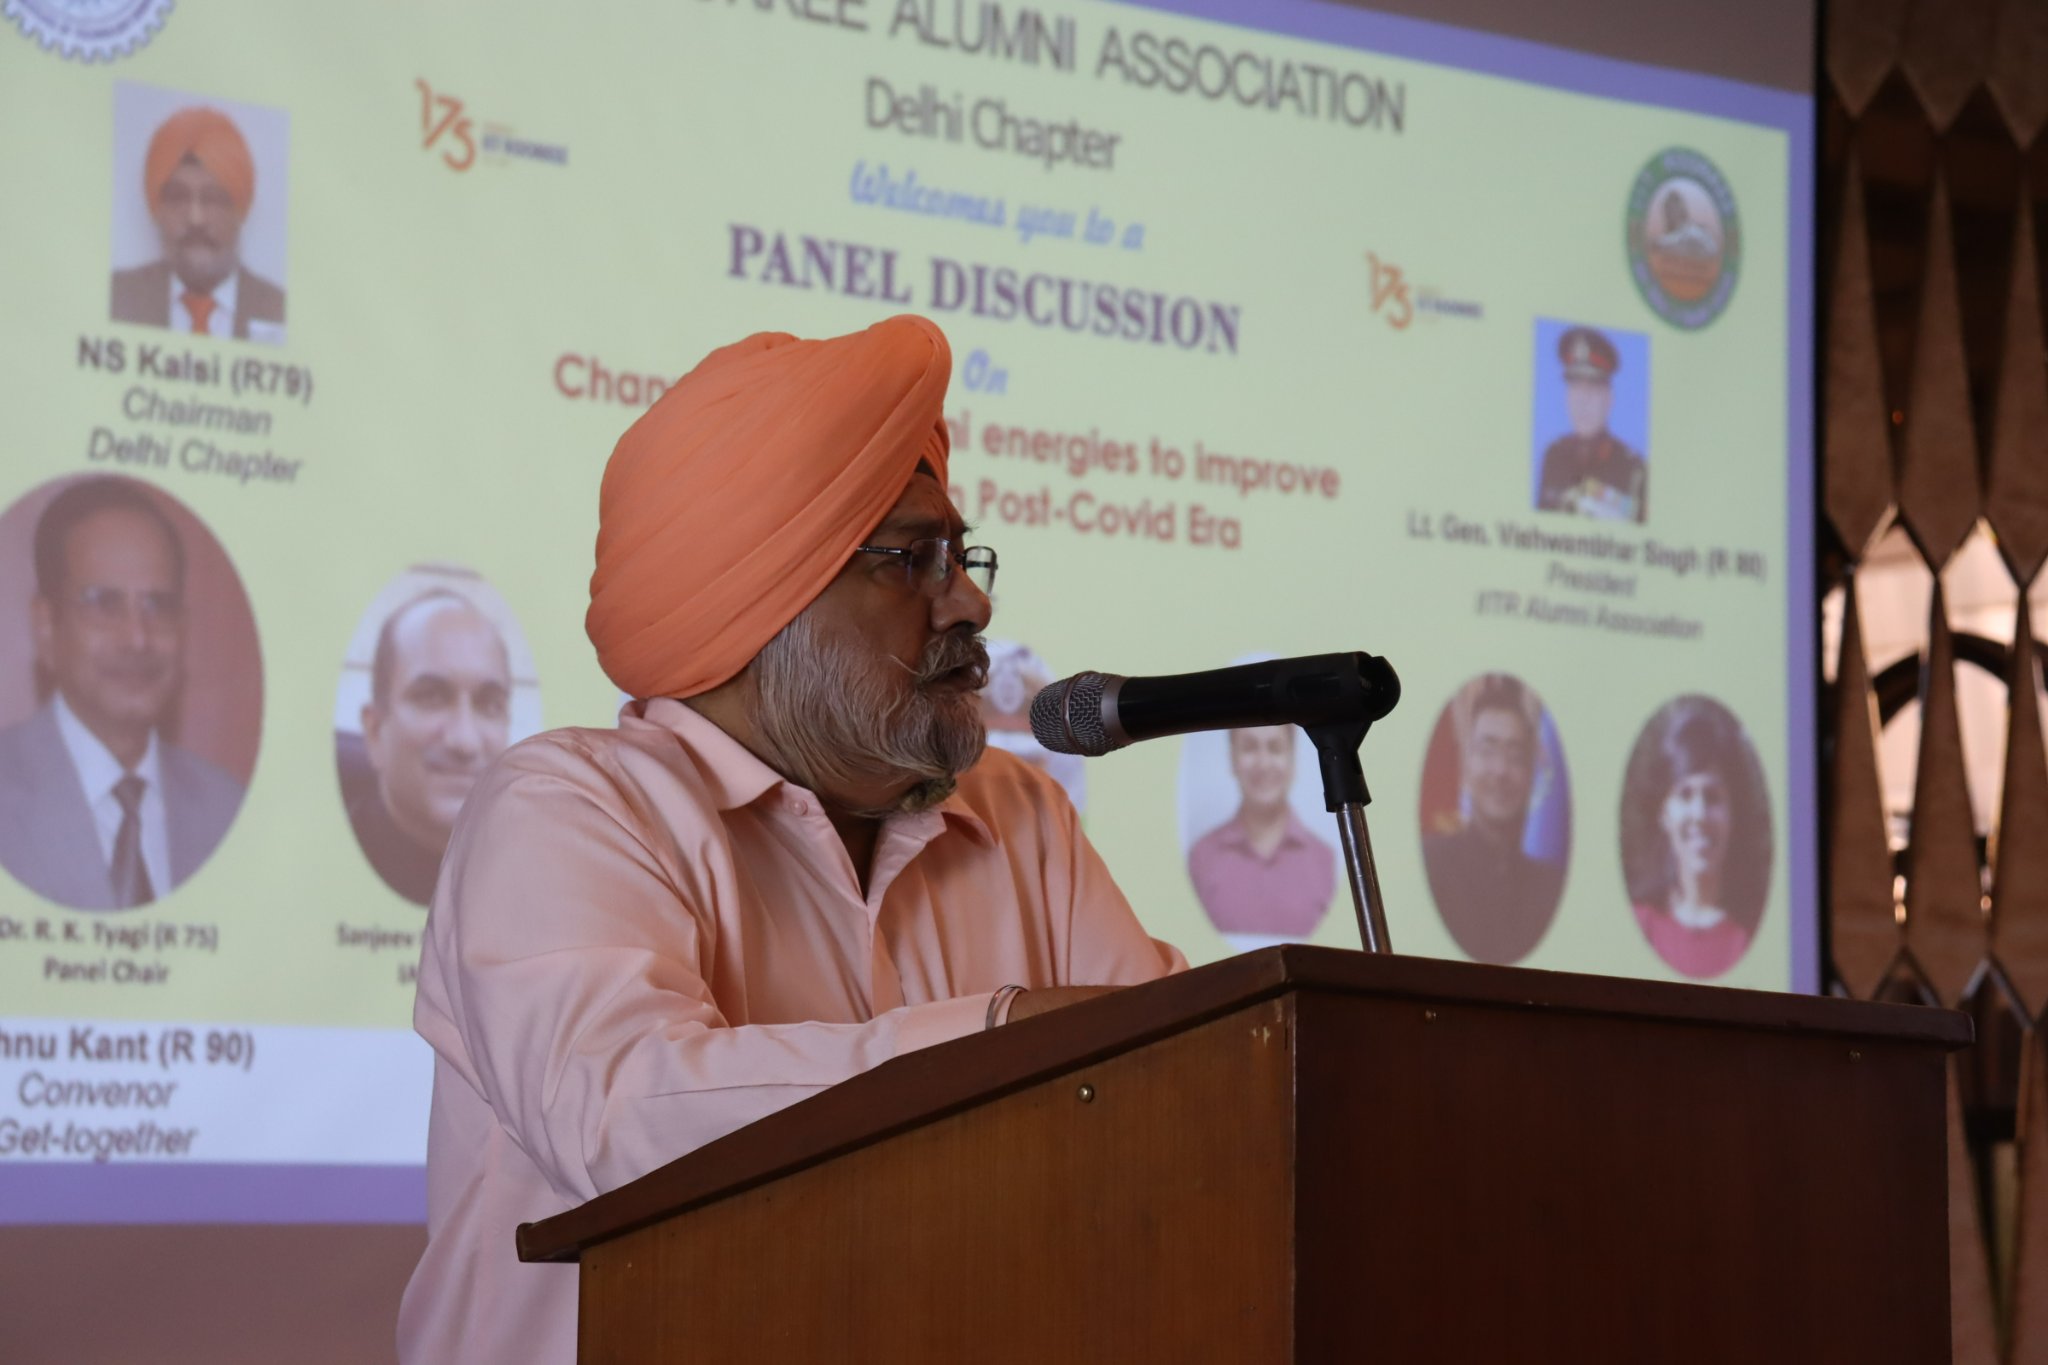 Dr. N.S. Kalsi, Chairman of the Delhi Chapter, IITRAA 